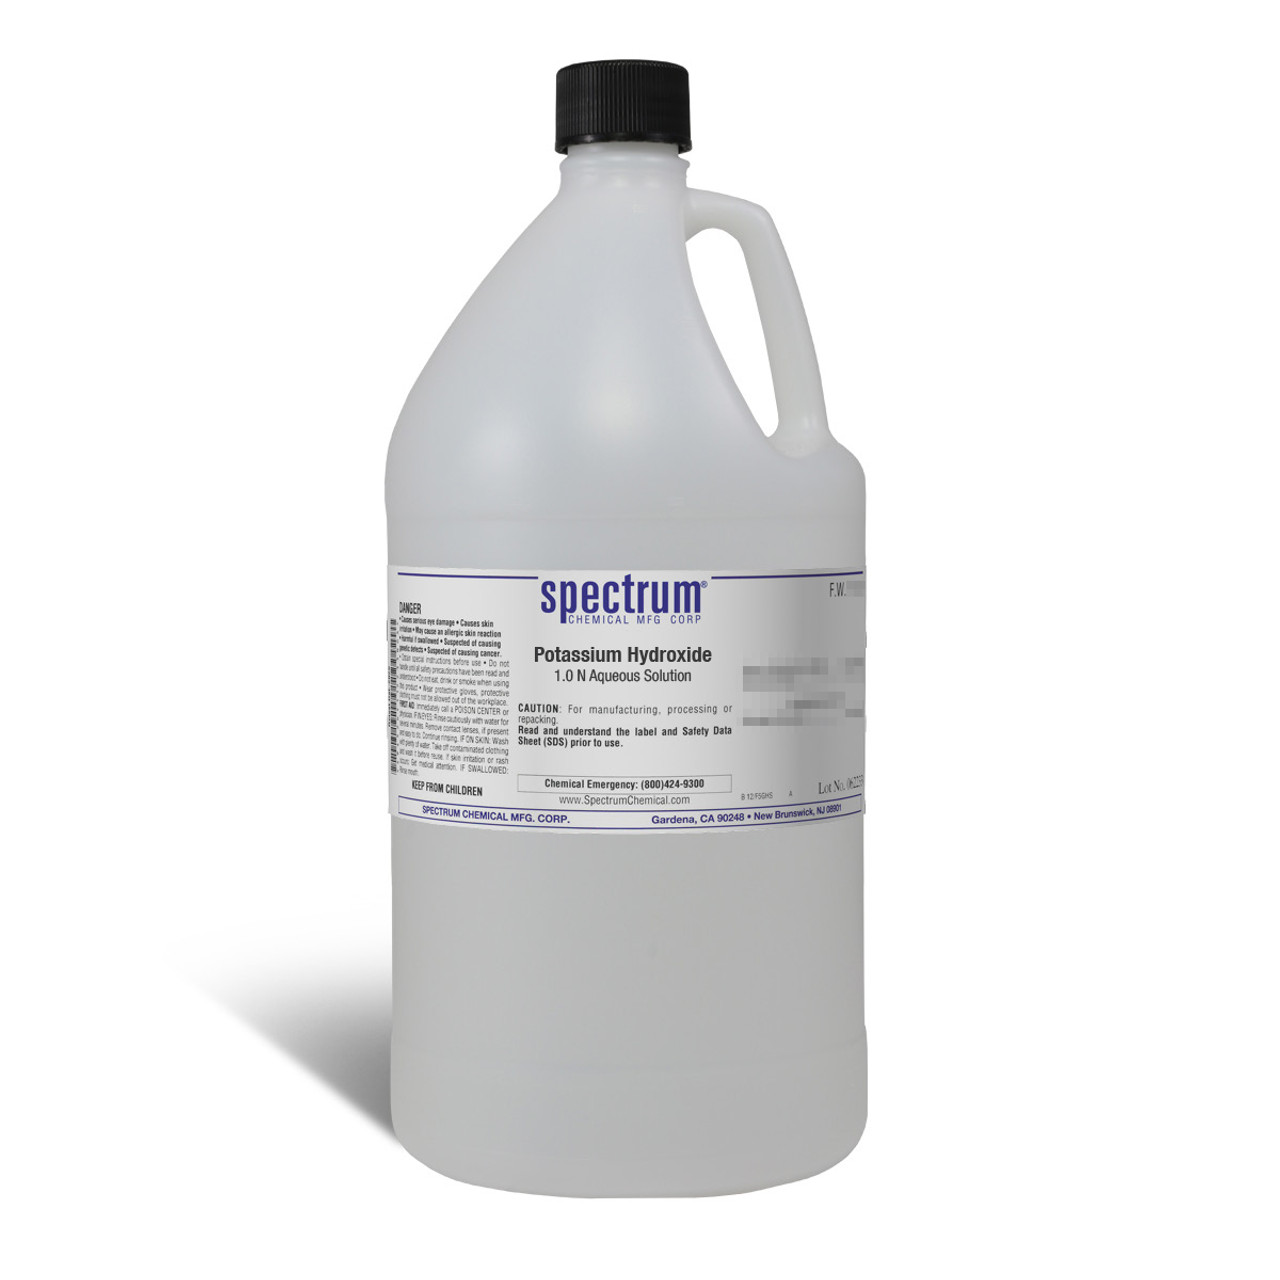 Potassium cyanide 10% (w/v) in aqueous solution